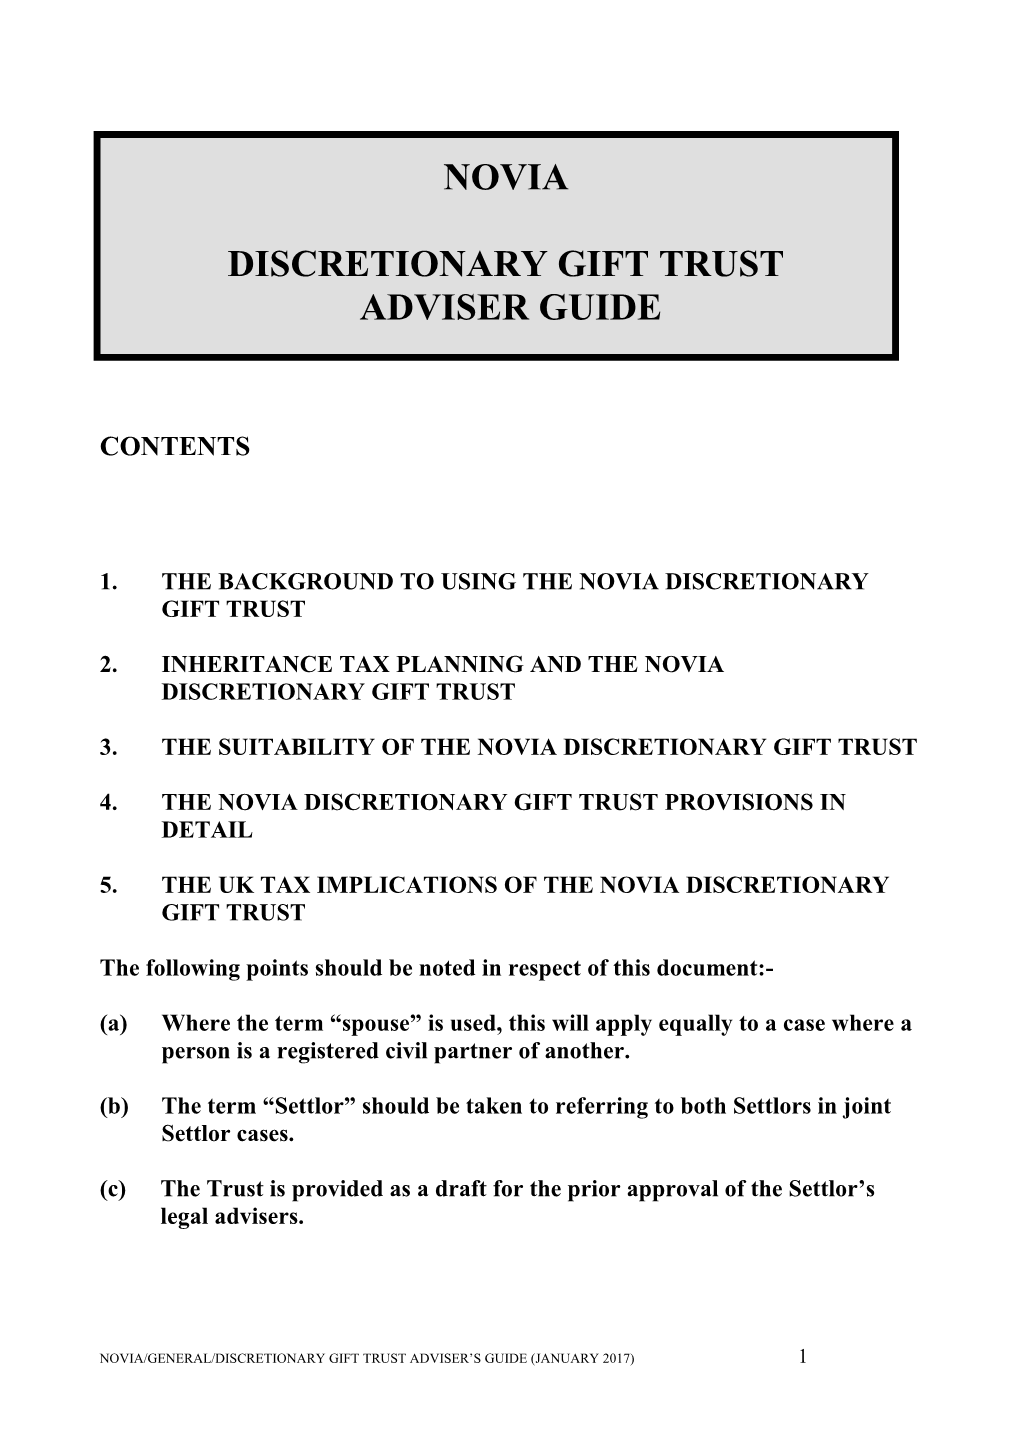 Discretionary Gift Trust